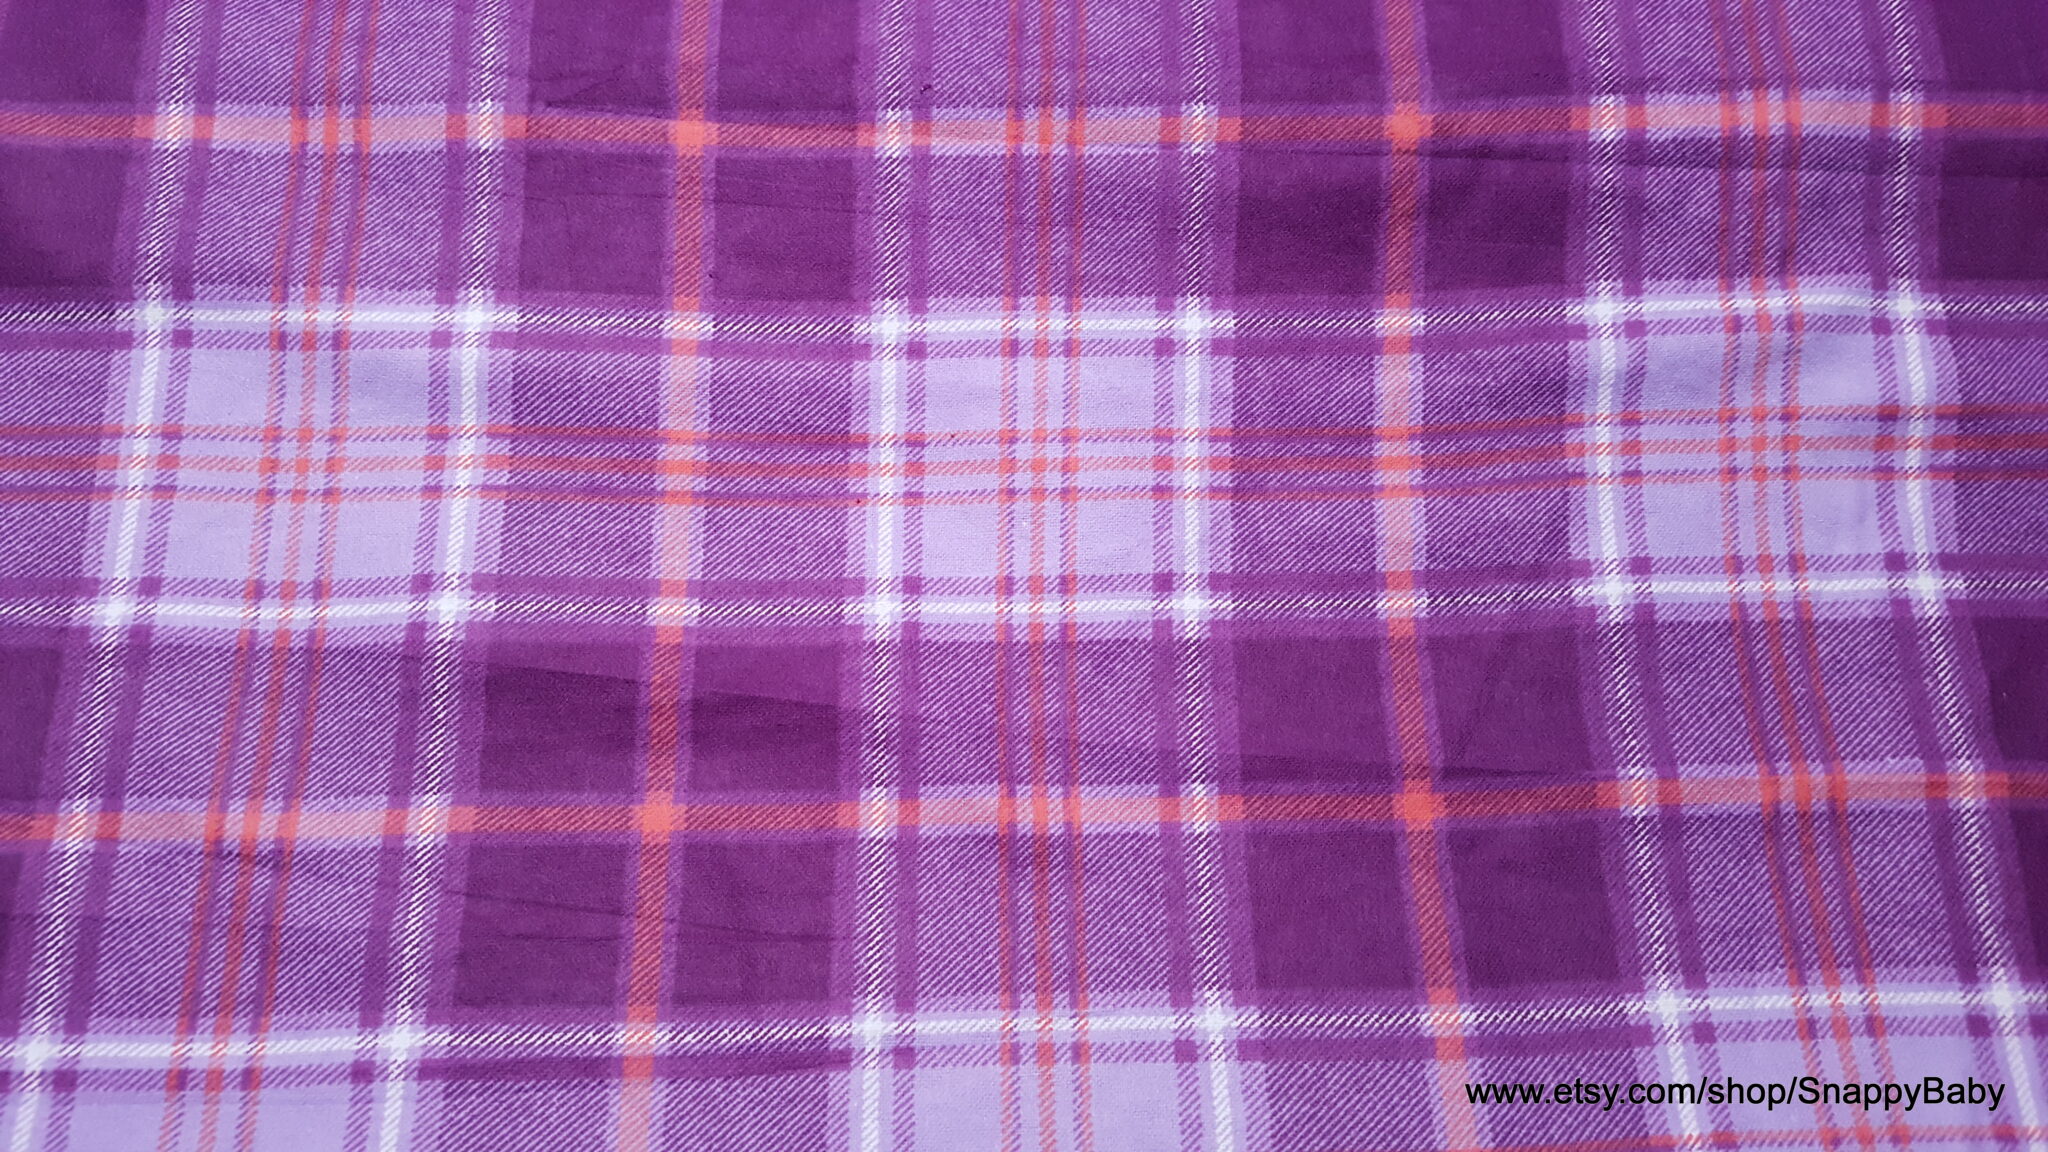 Flannel Fabric - Sassy Warm Plaid - By the yard - 100% Cotton Flannel ...